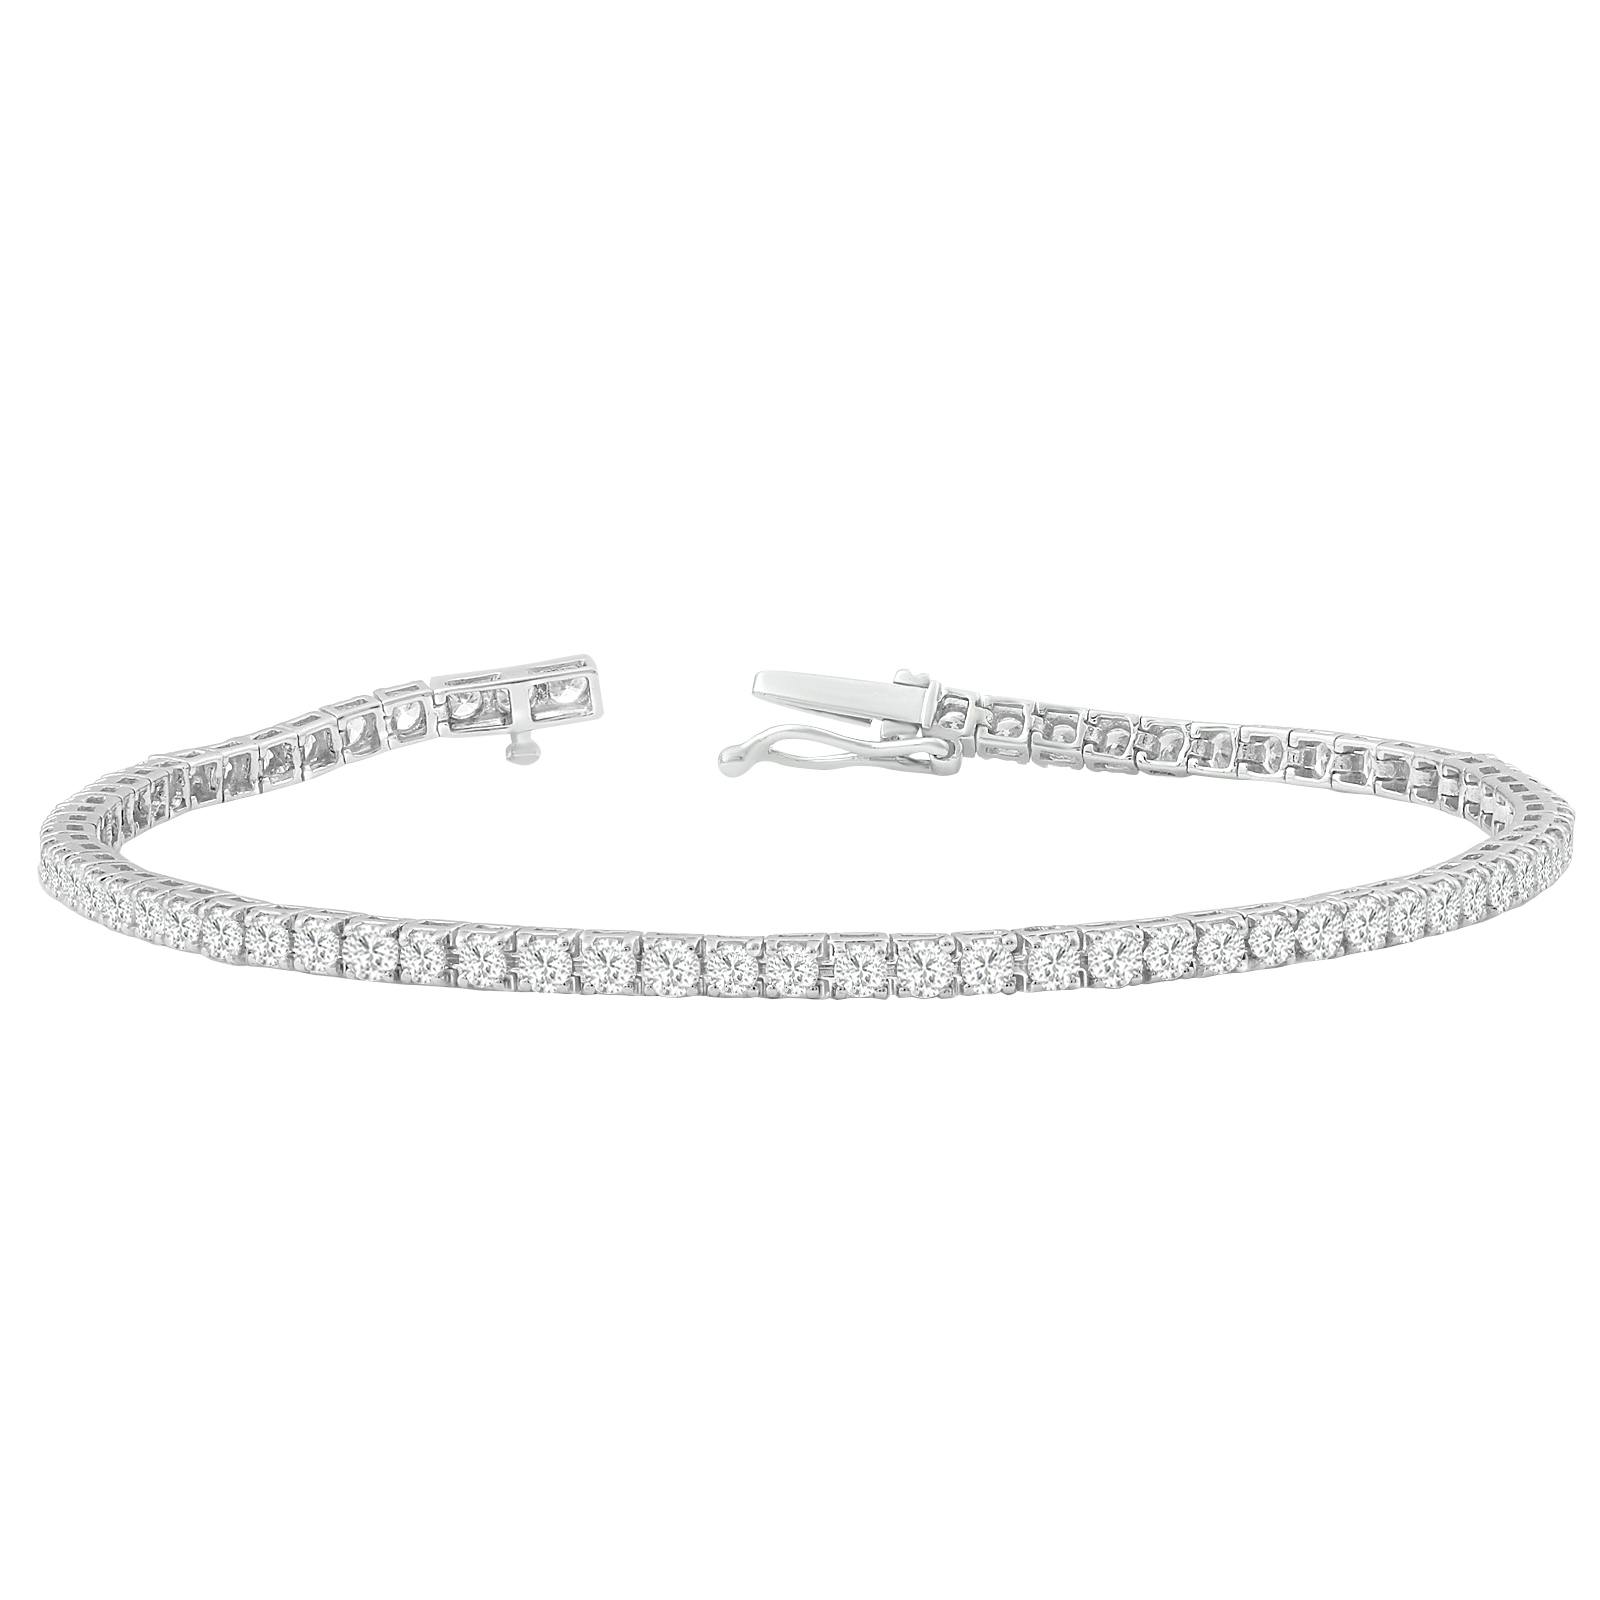 3.0ct Tennis bracelet - Claw set, 7” length